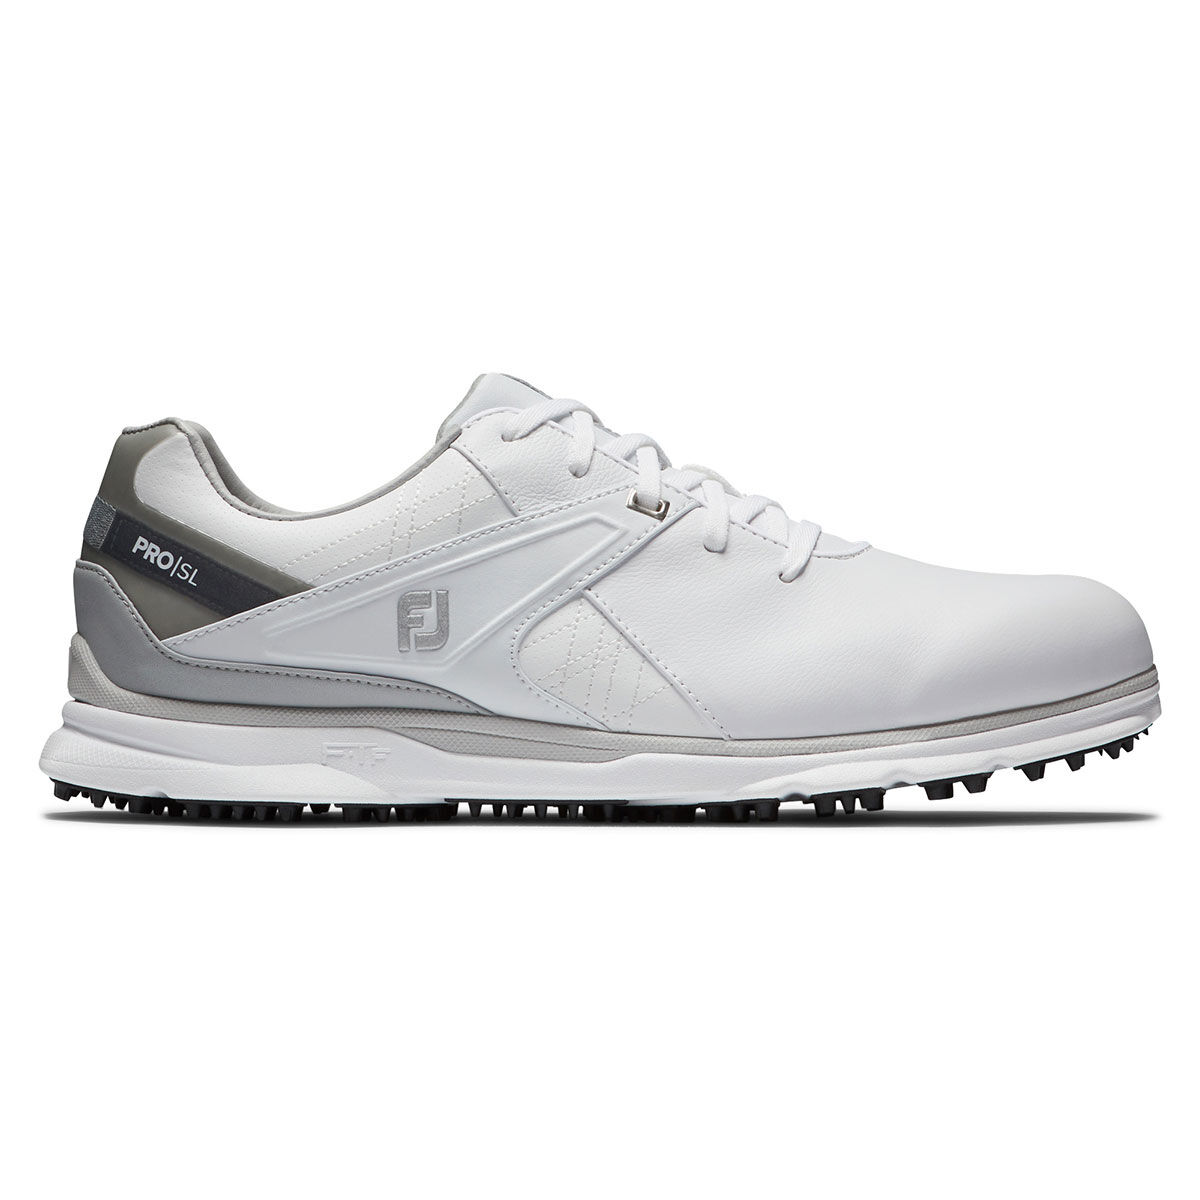 Chaussures FootJoy Pro SL, homme, 7, Blanc/Noir/Gris, Normal | Online Golf